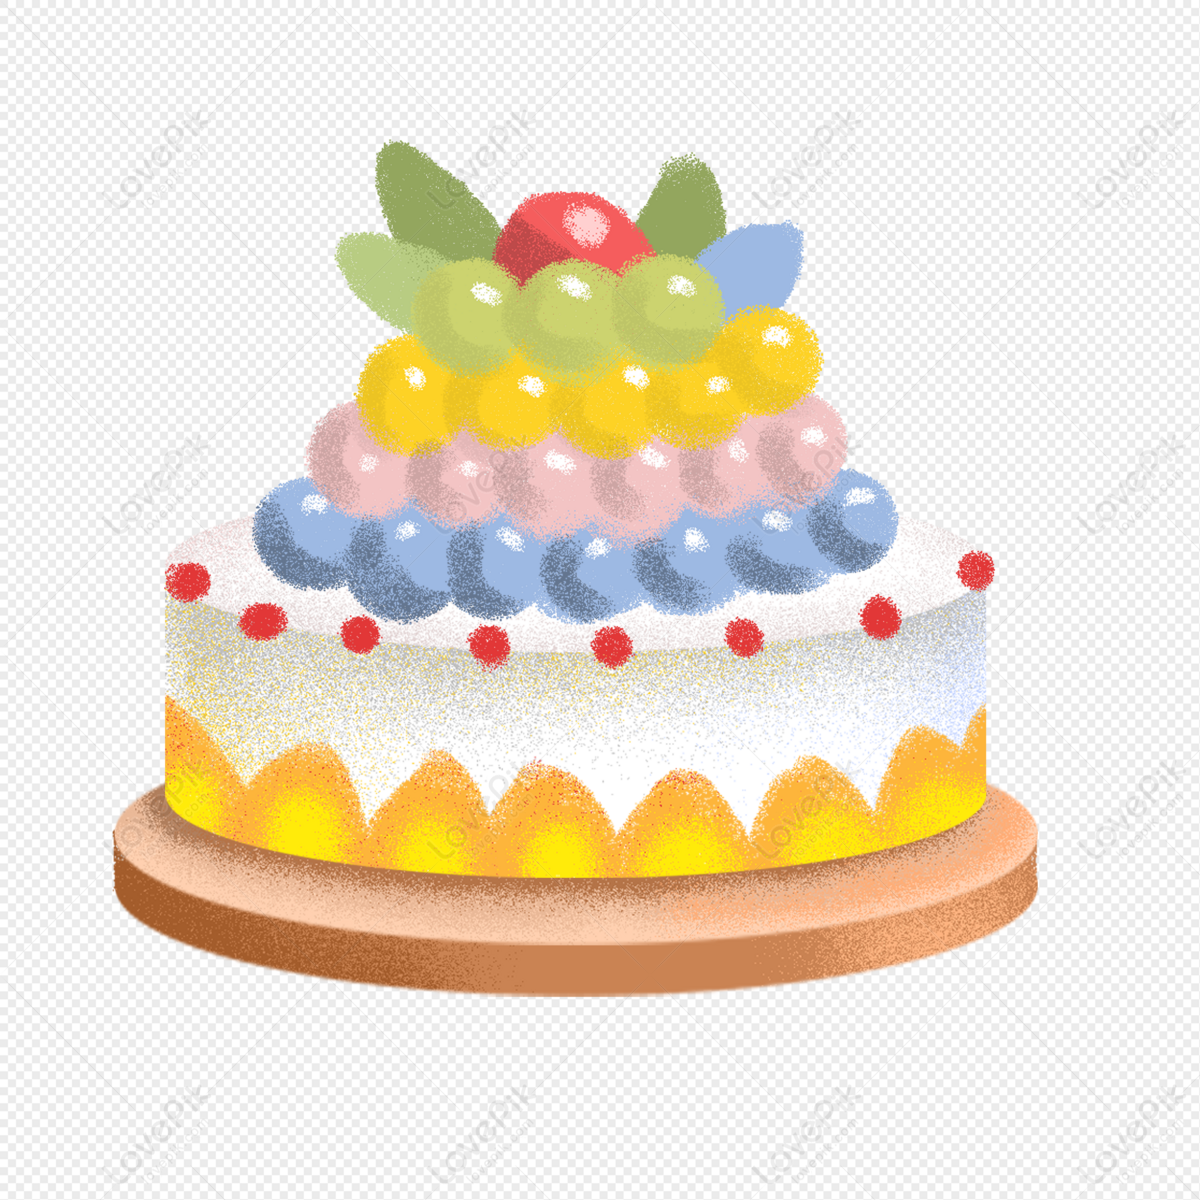 Hand Drawn Birthday Cake Illustration PNG Transparent Background ...